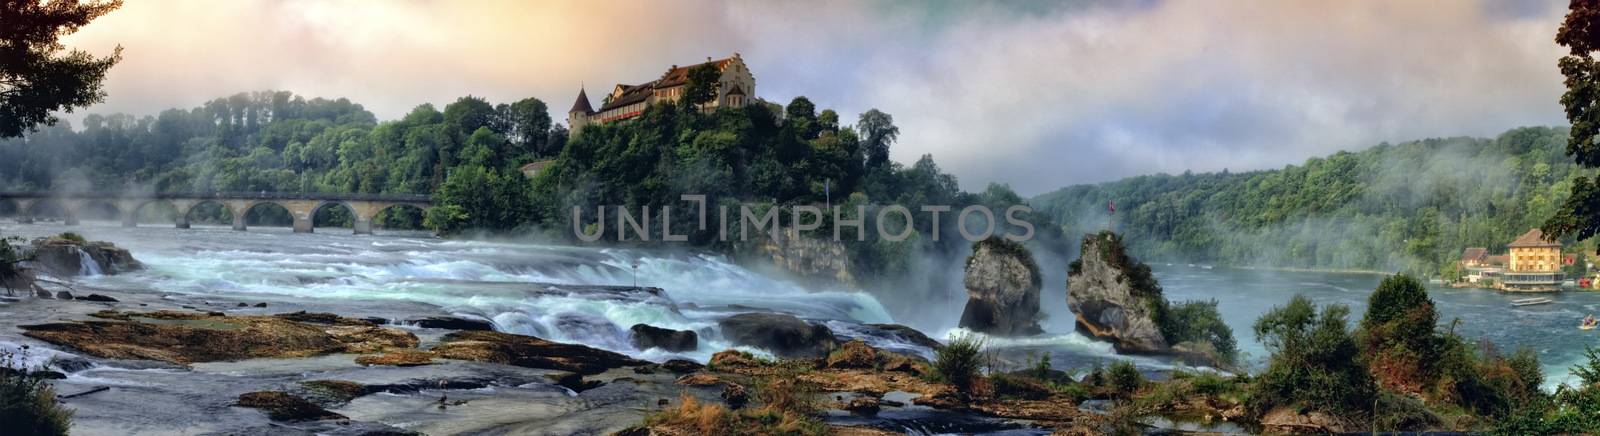 Rhinefalls, Switzerland by Elenaphotos21